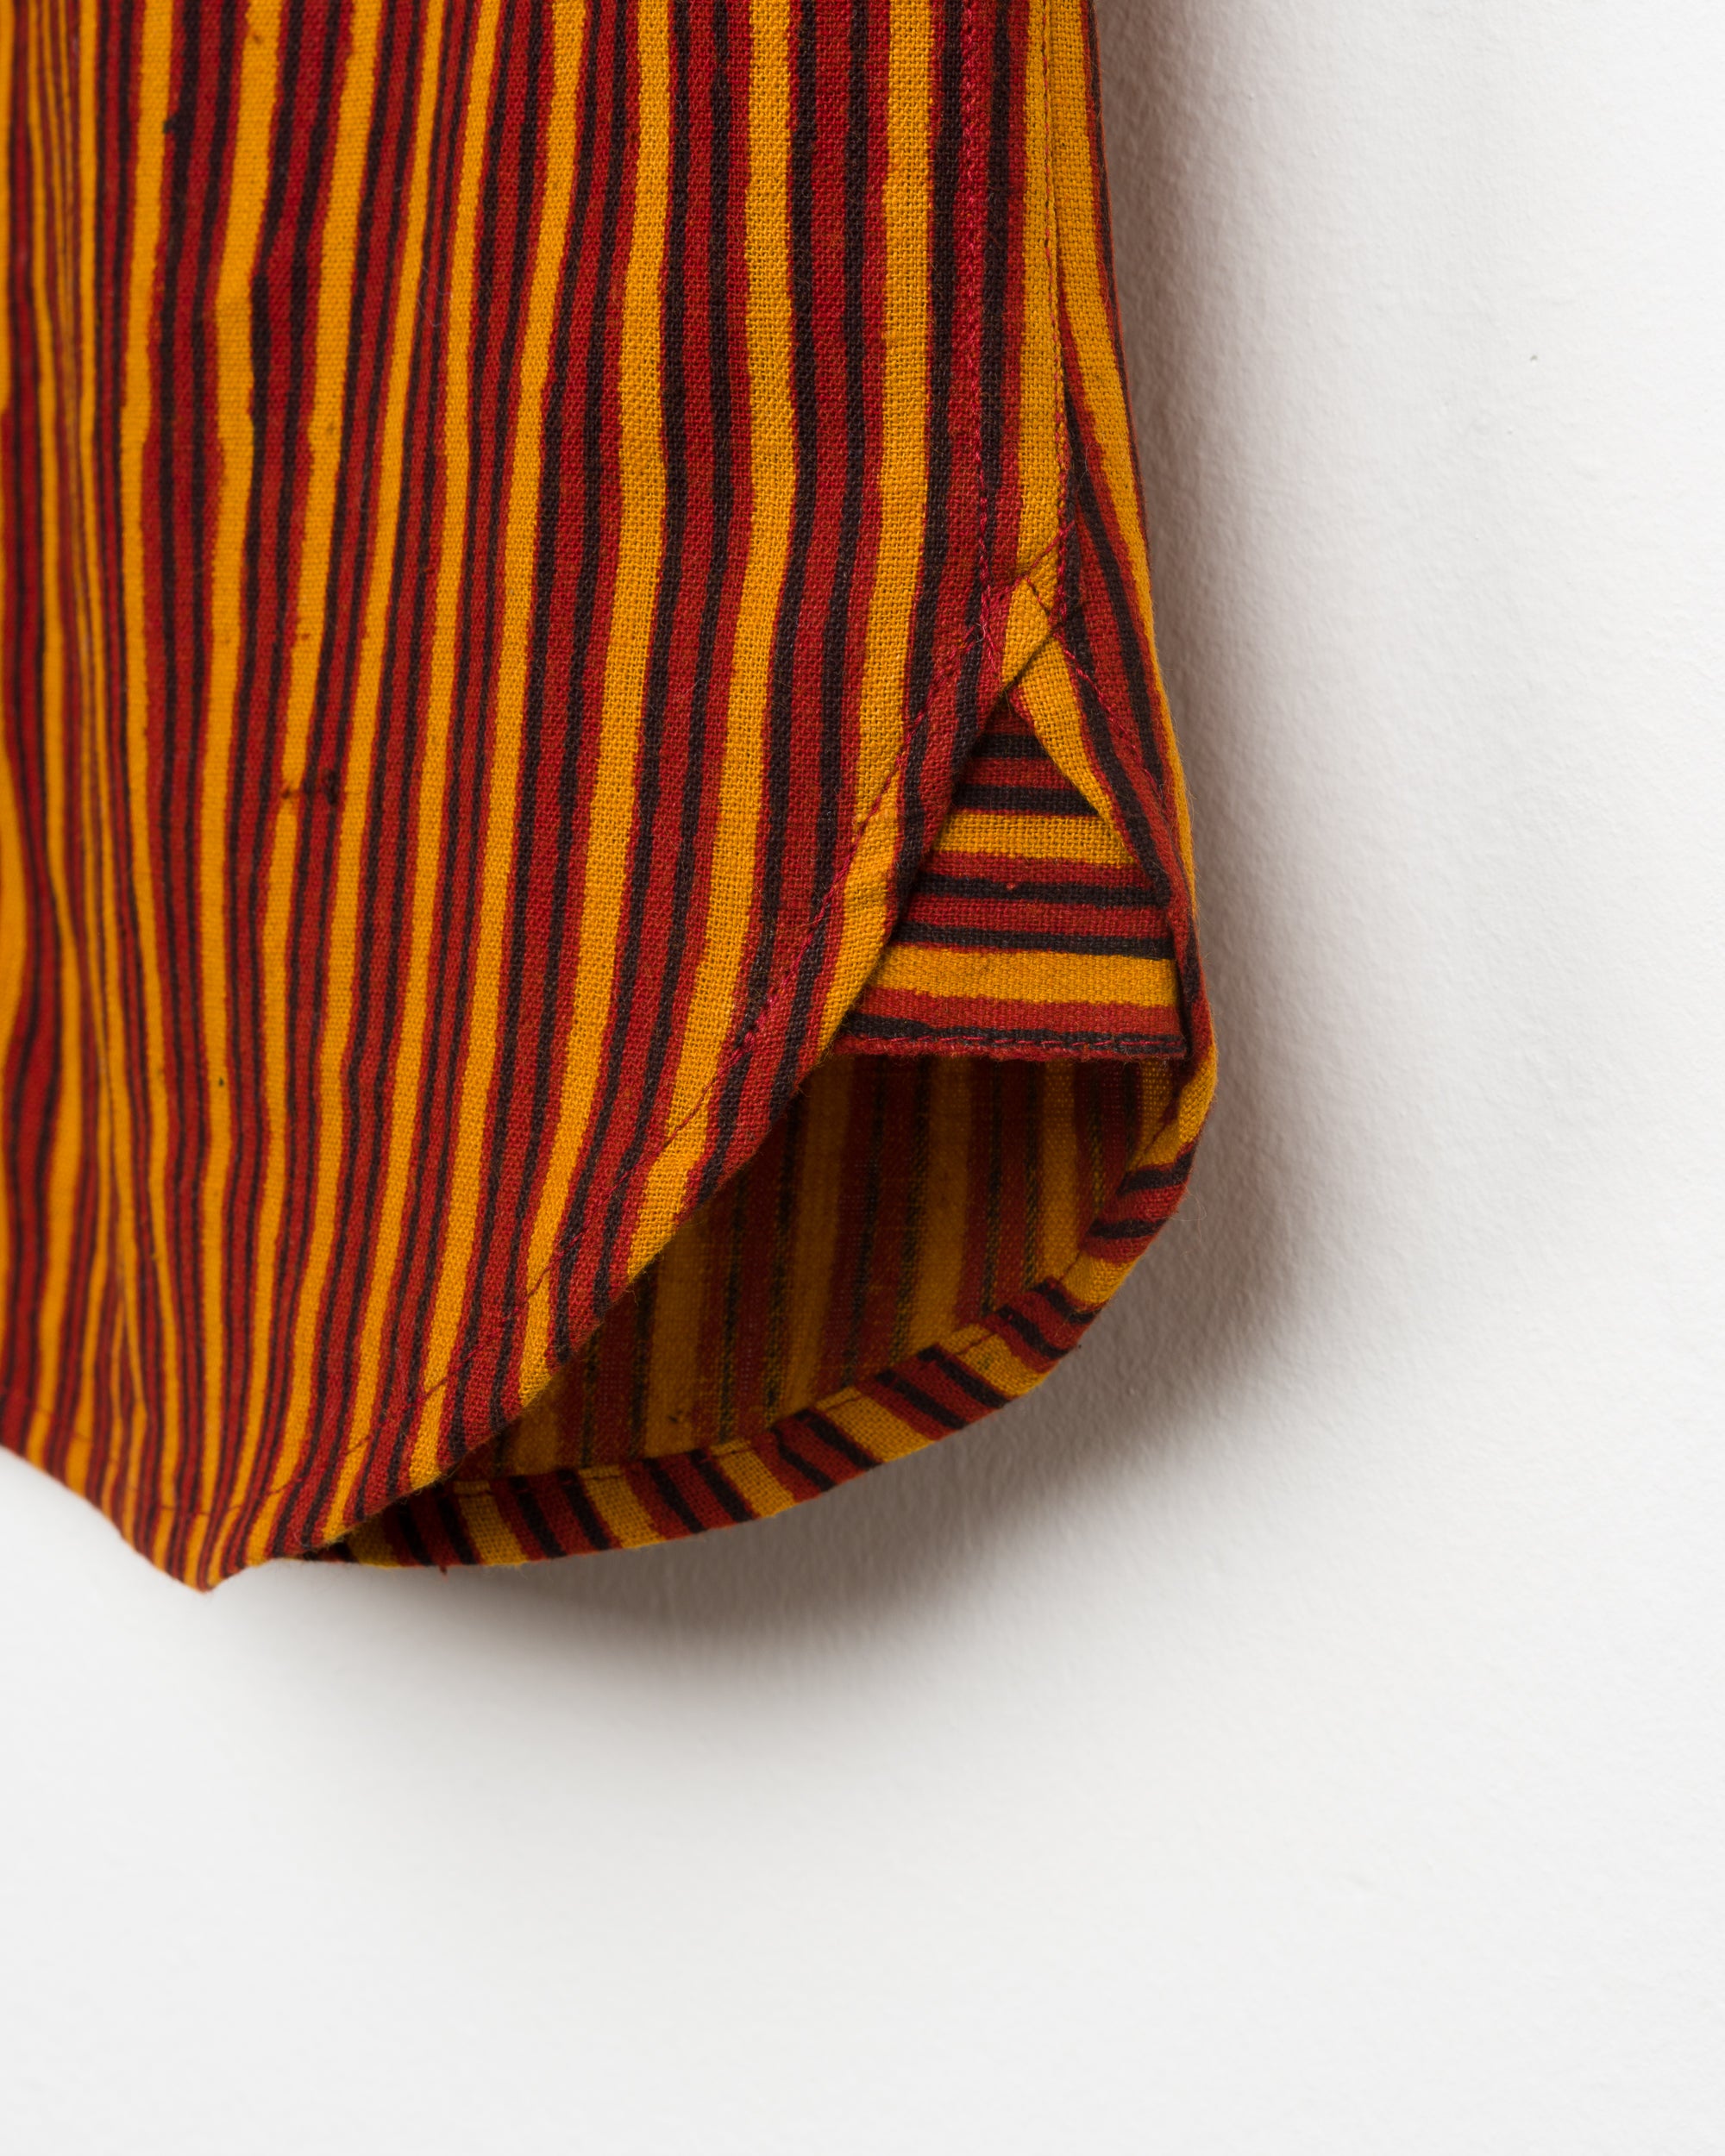 S/S Kabir Standard Shirt in Pomegranate Stripe Block